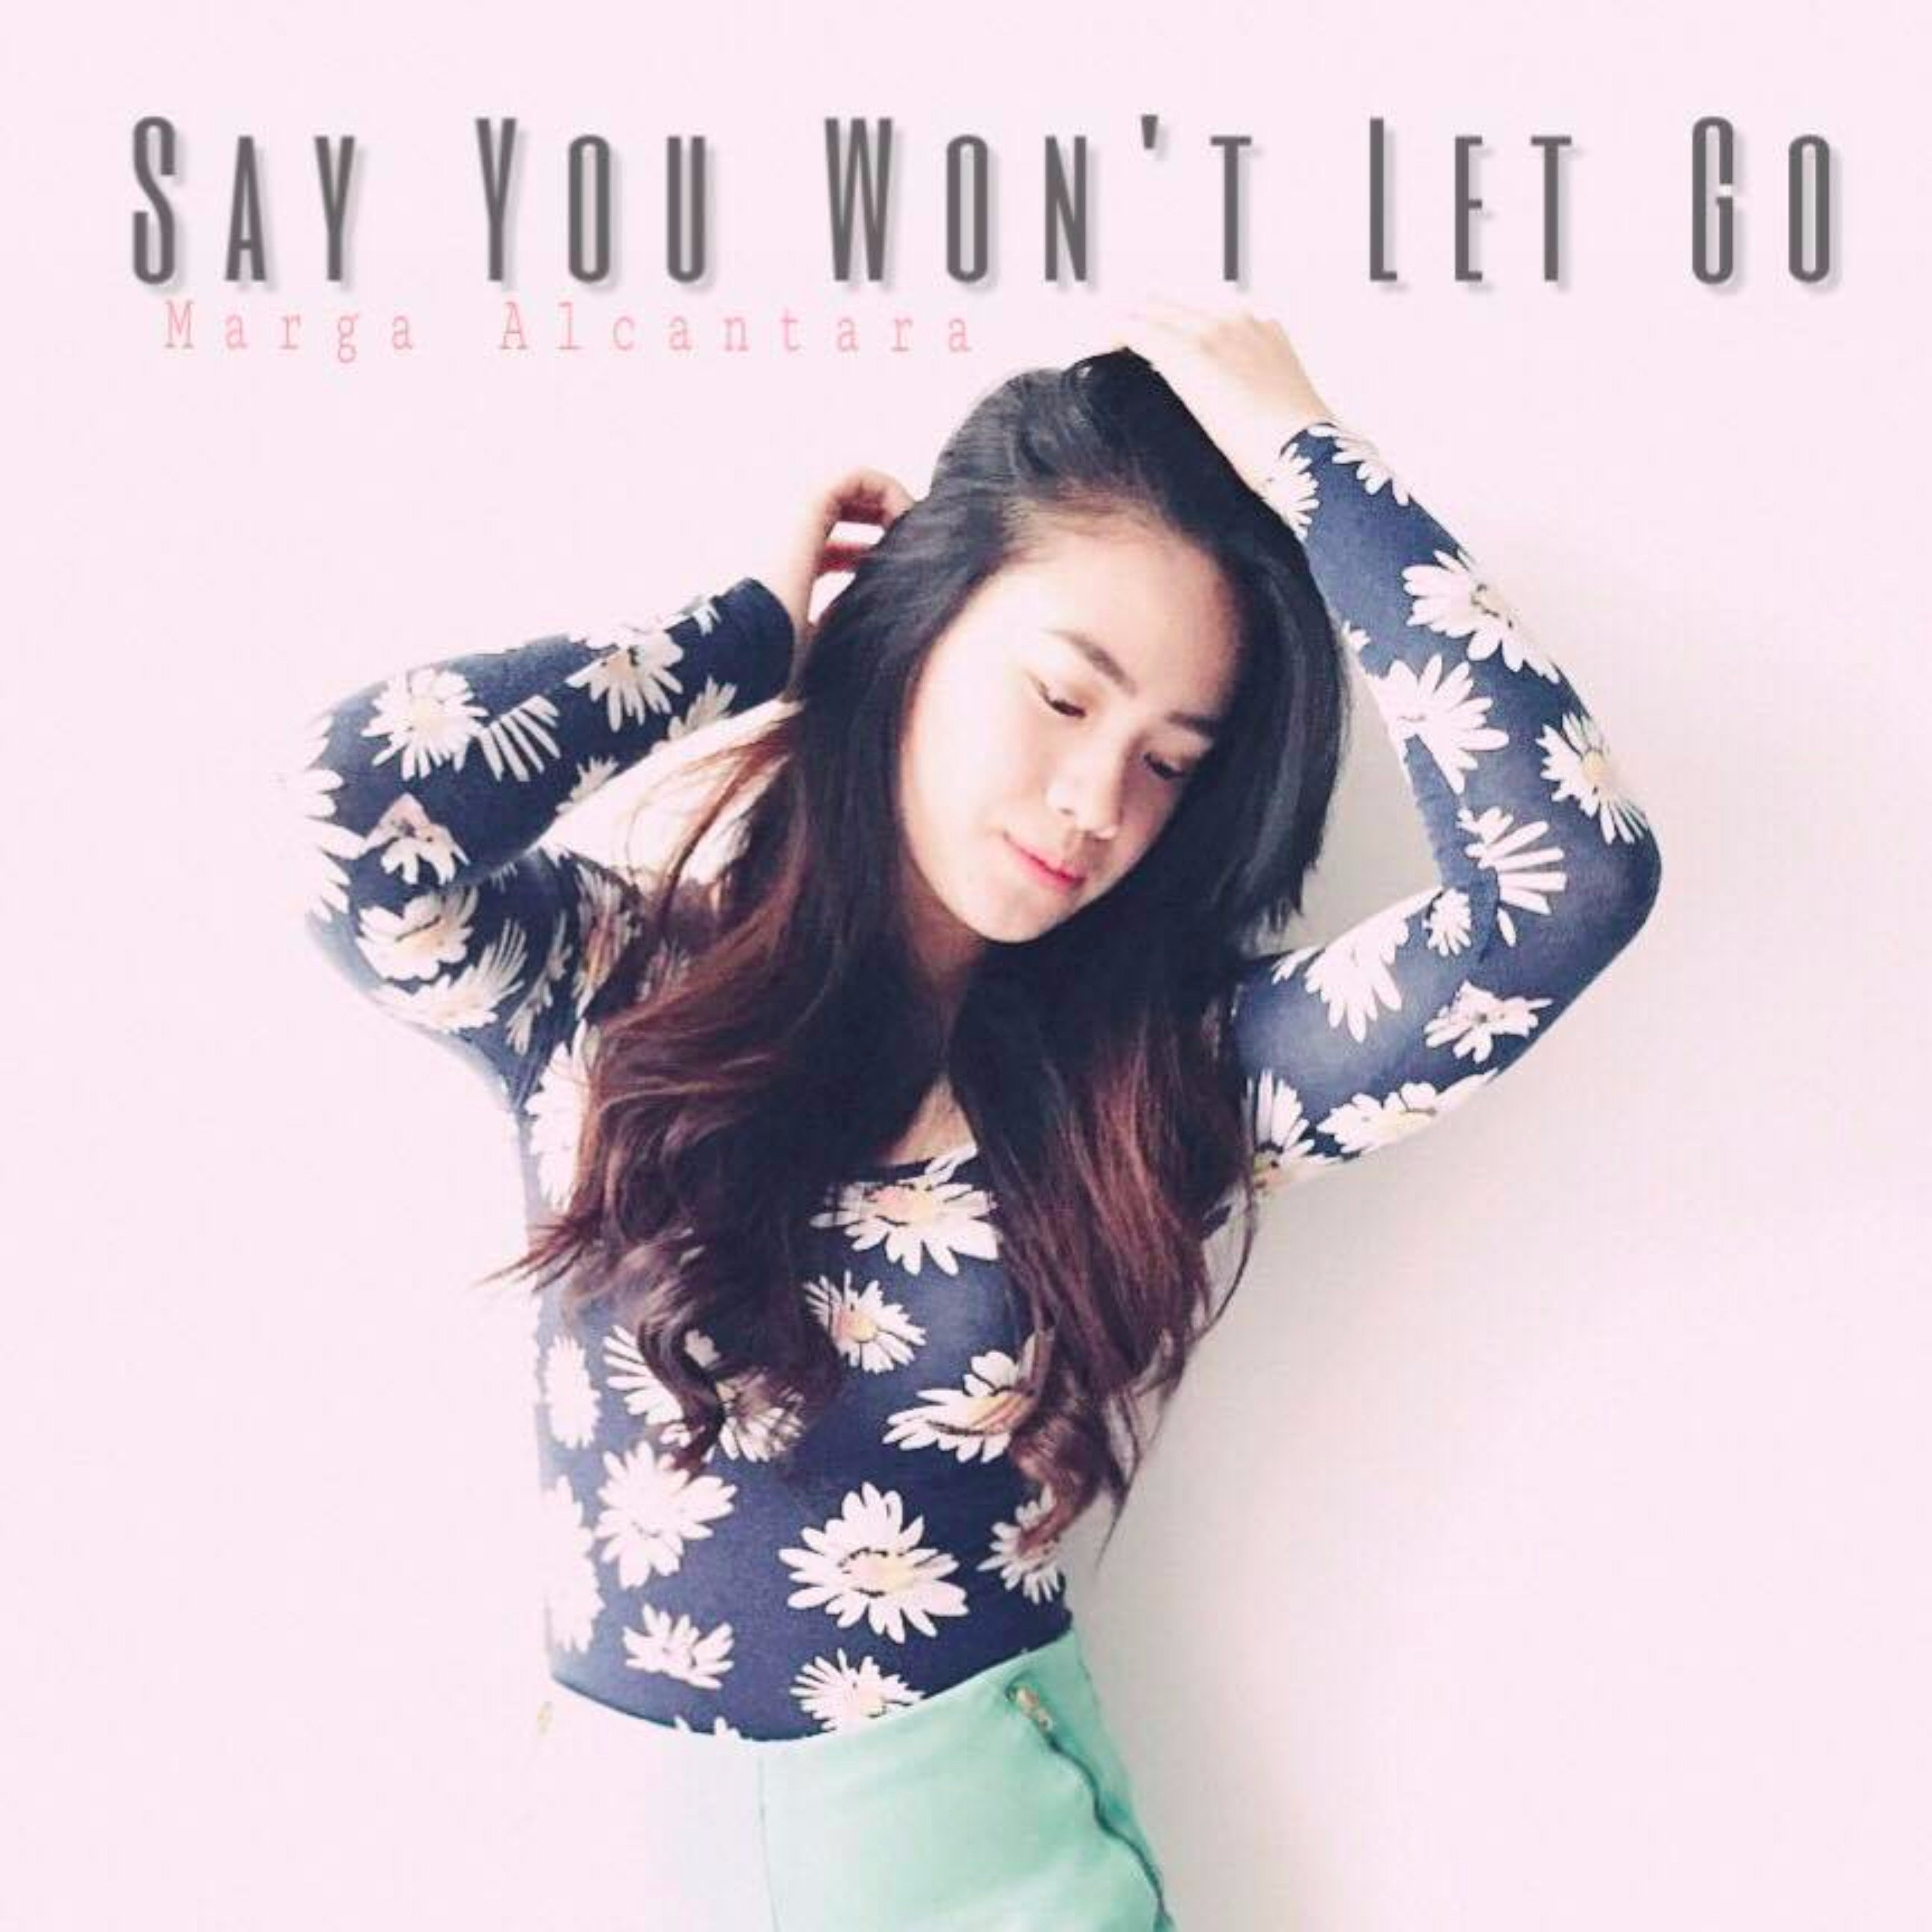 Гоу вей песня. You won't. Eleteo - say you won't Let go (16+). Let go YWY 尤伟阳.